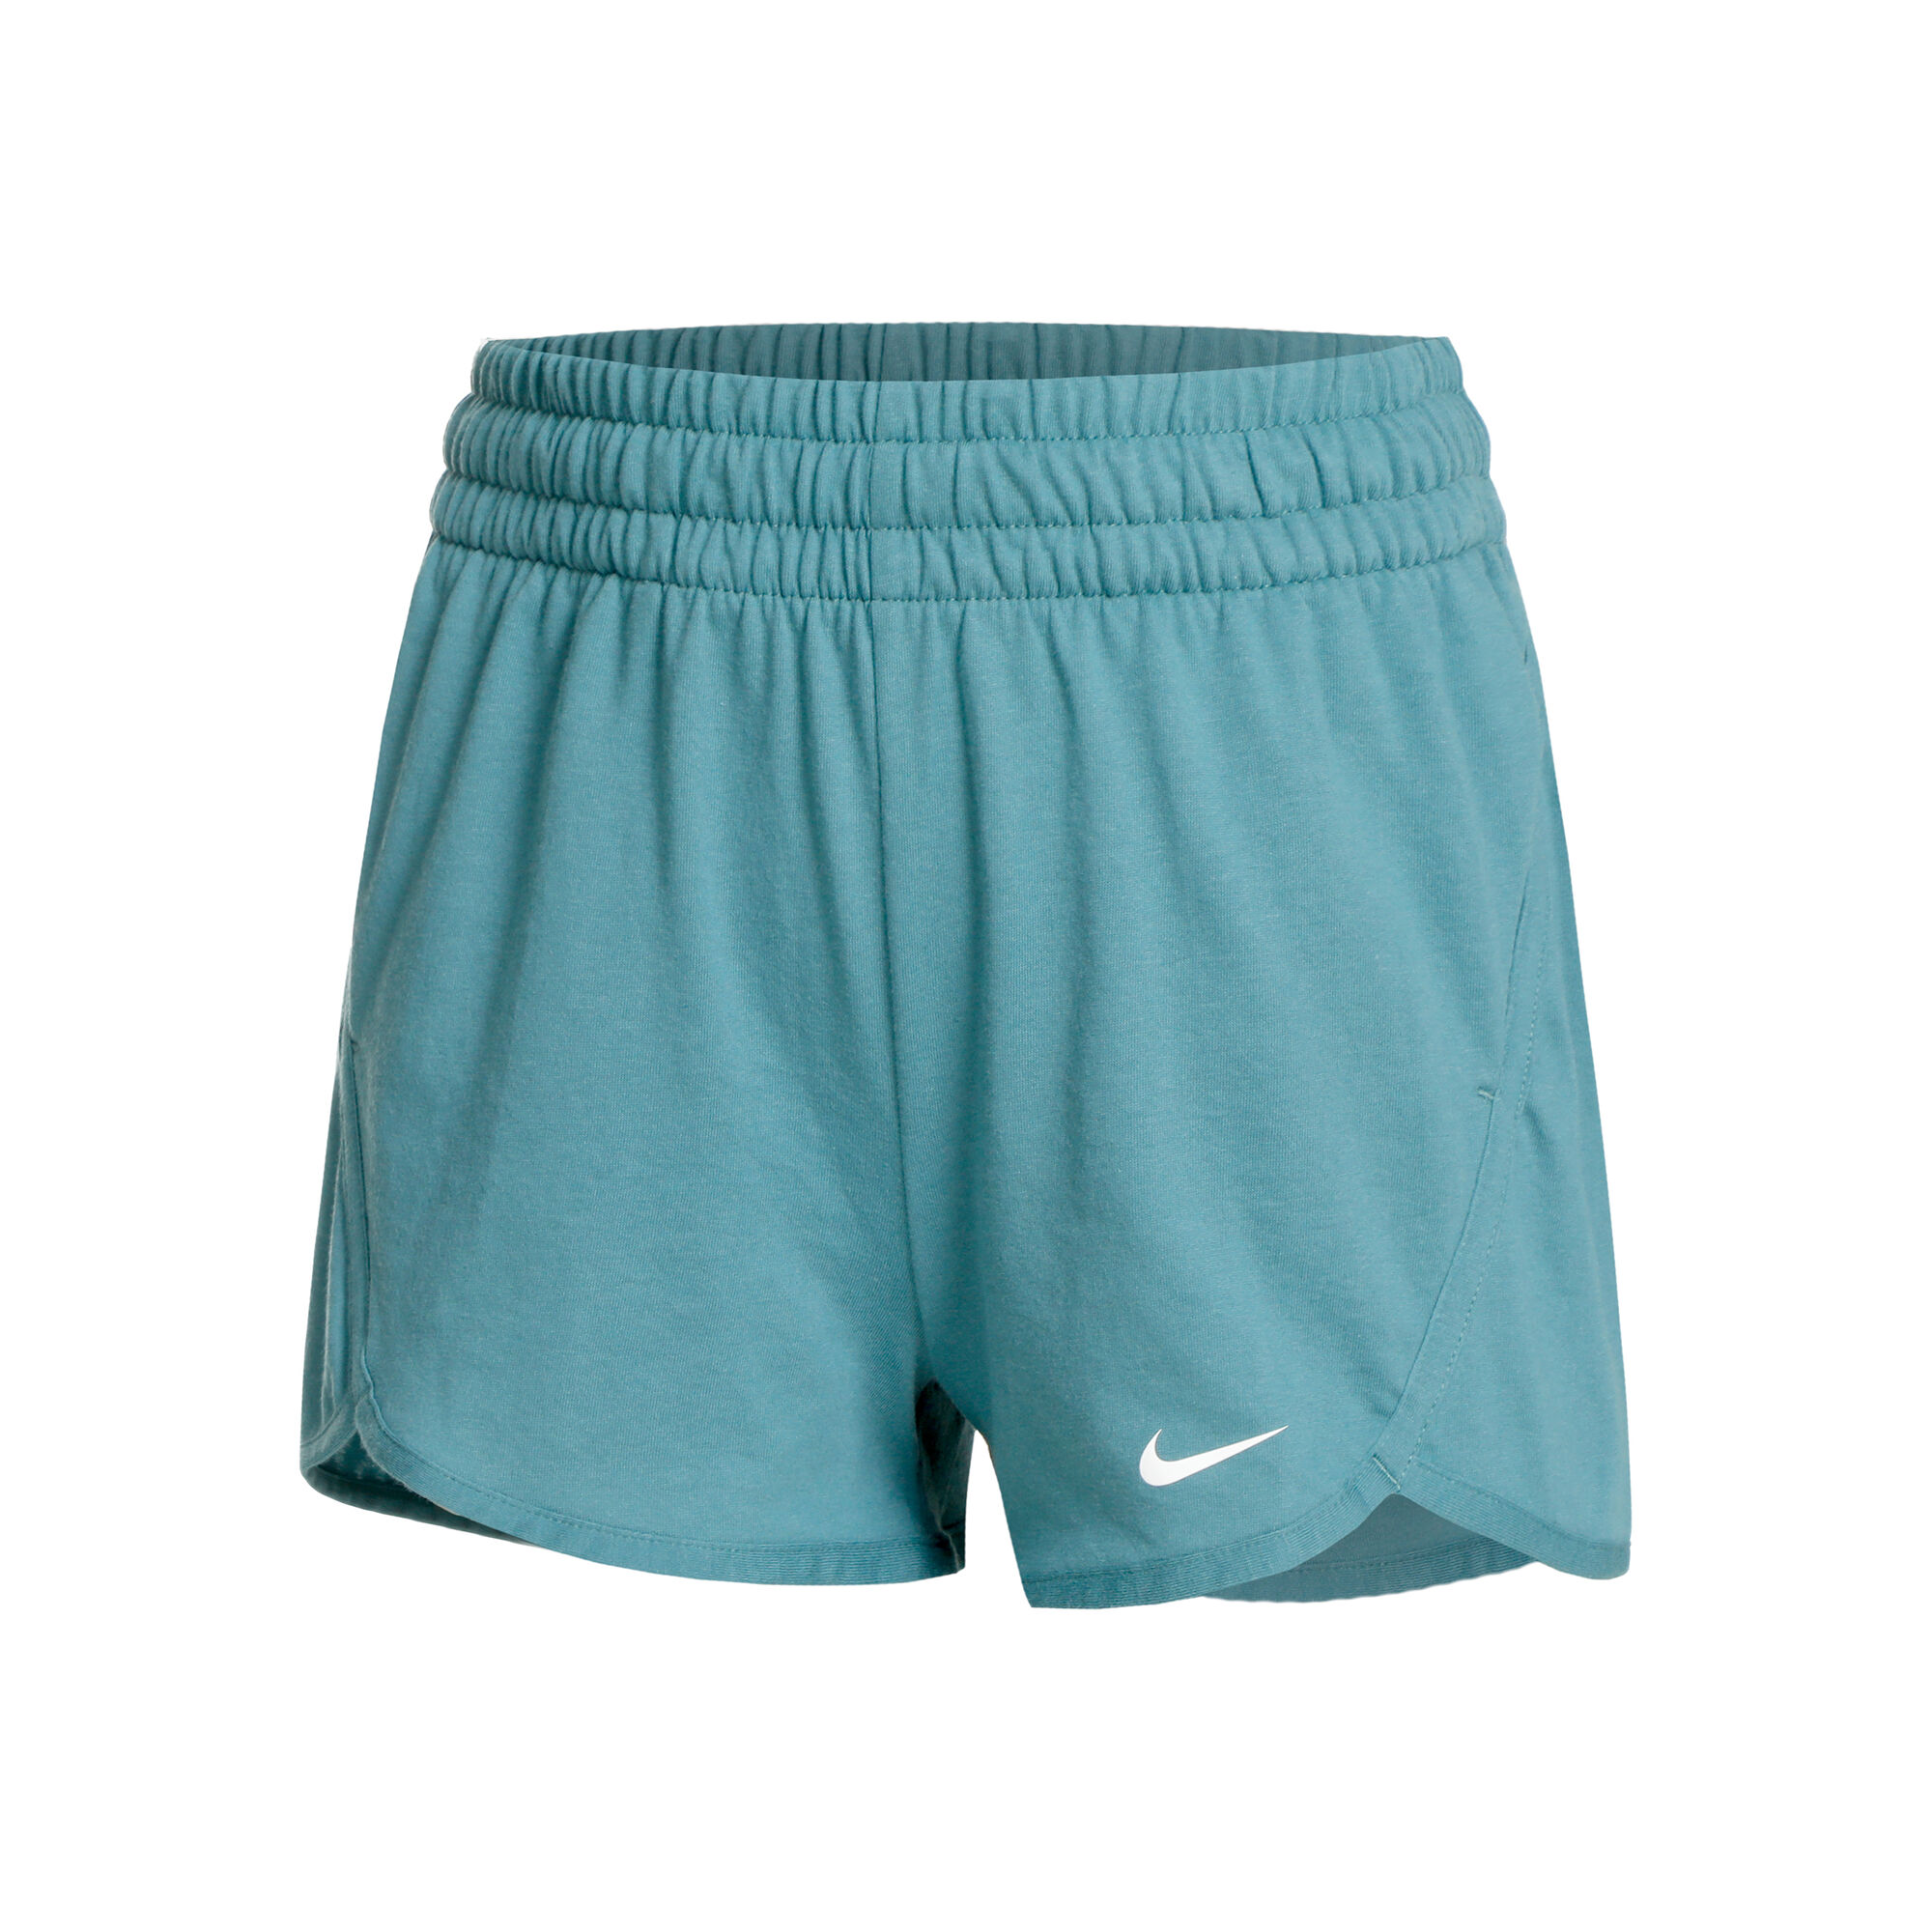 Buy Nike Dri-Fit Knit Shorts Girls Turquoise online